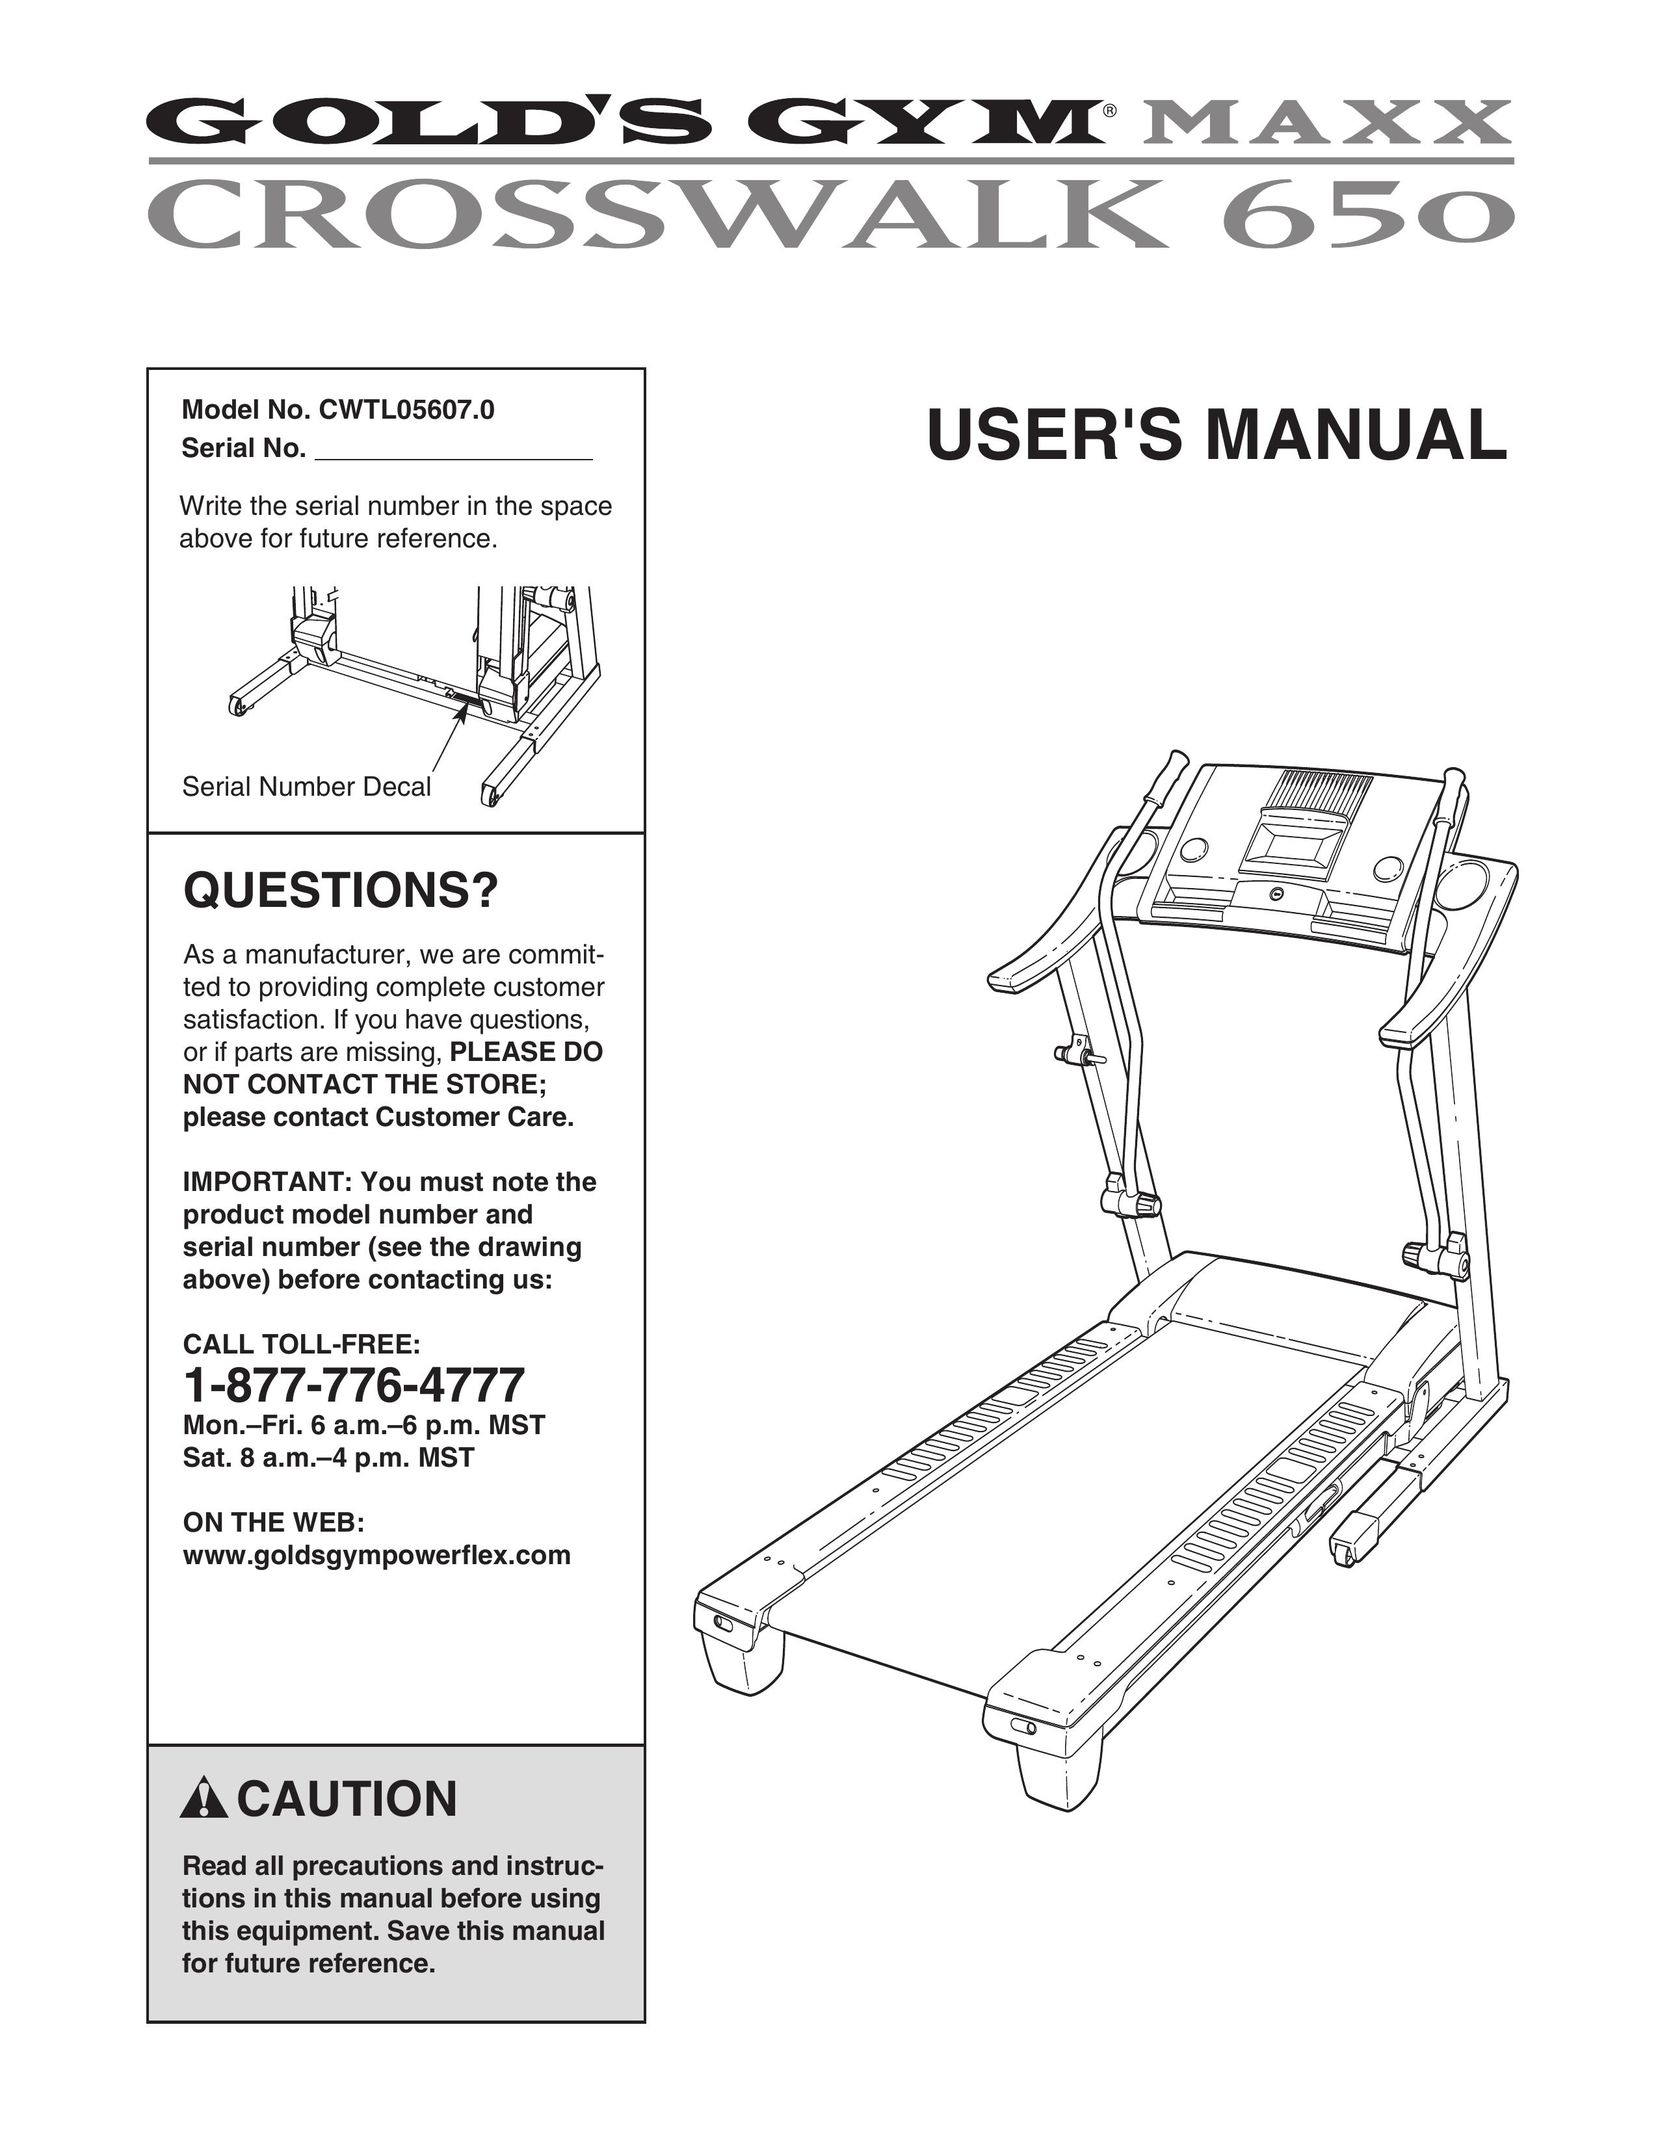 Gold's Gym CWTL05607.0 Treadmill User Manual